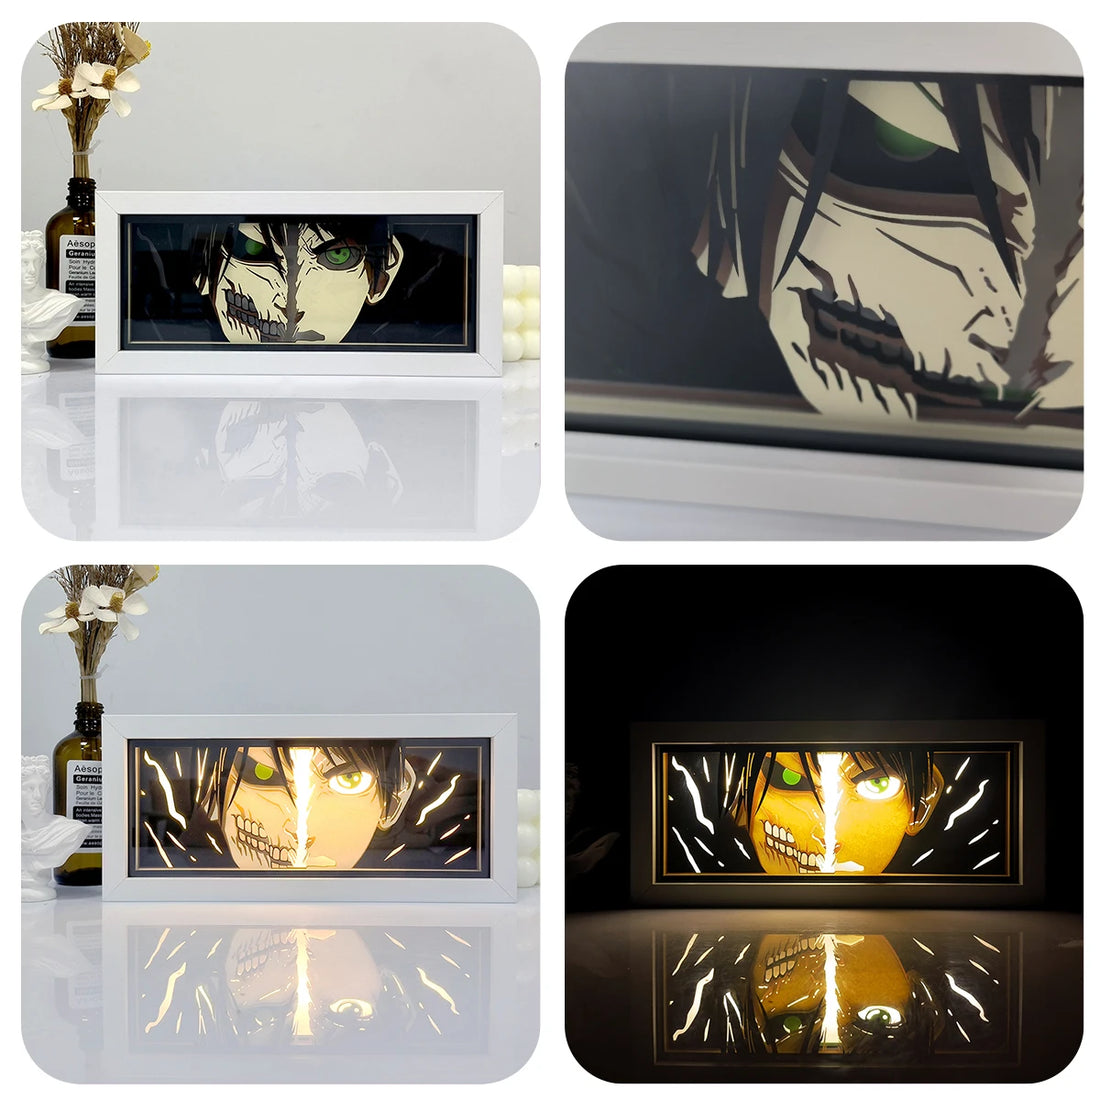 Eren Jeager - Attack on Titan Light Box